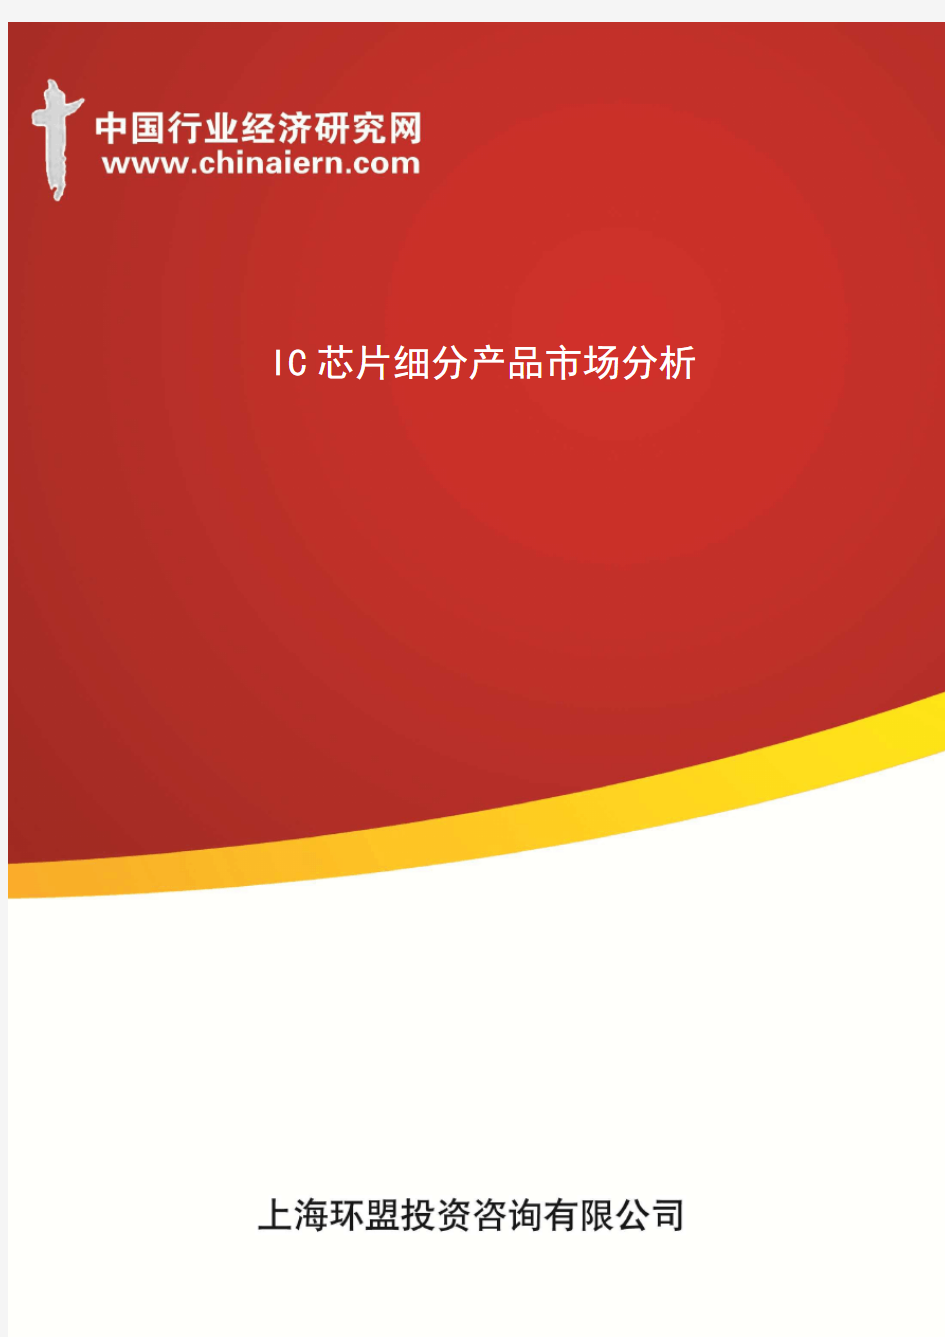 IC芯片细分产品市场分析(上海环盟)